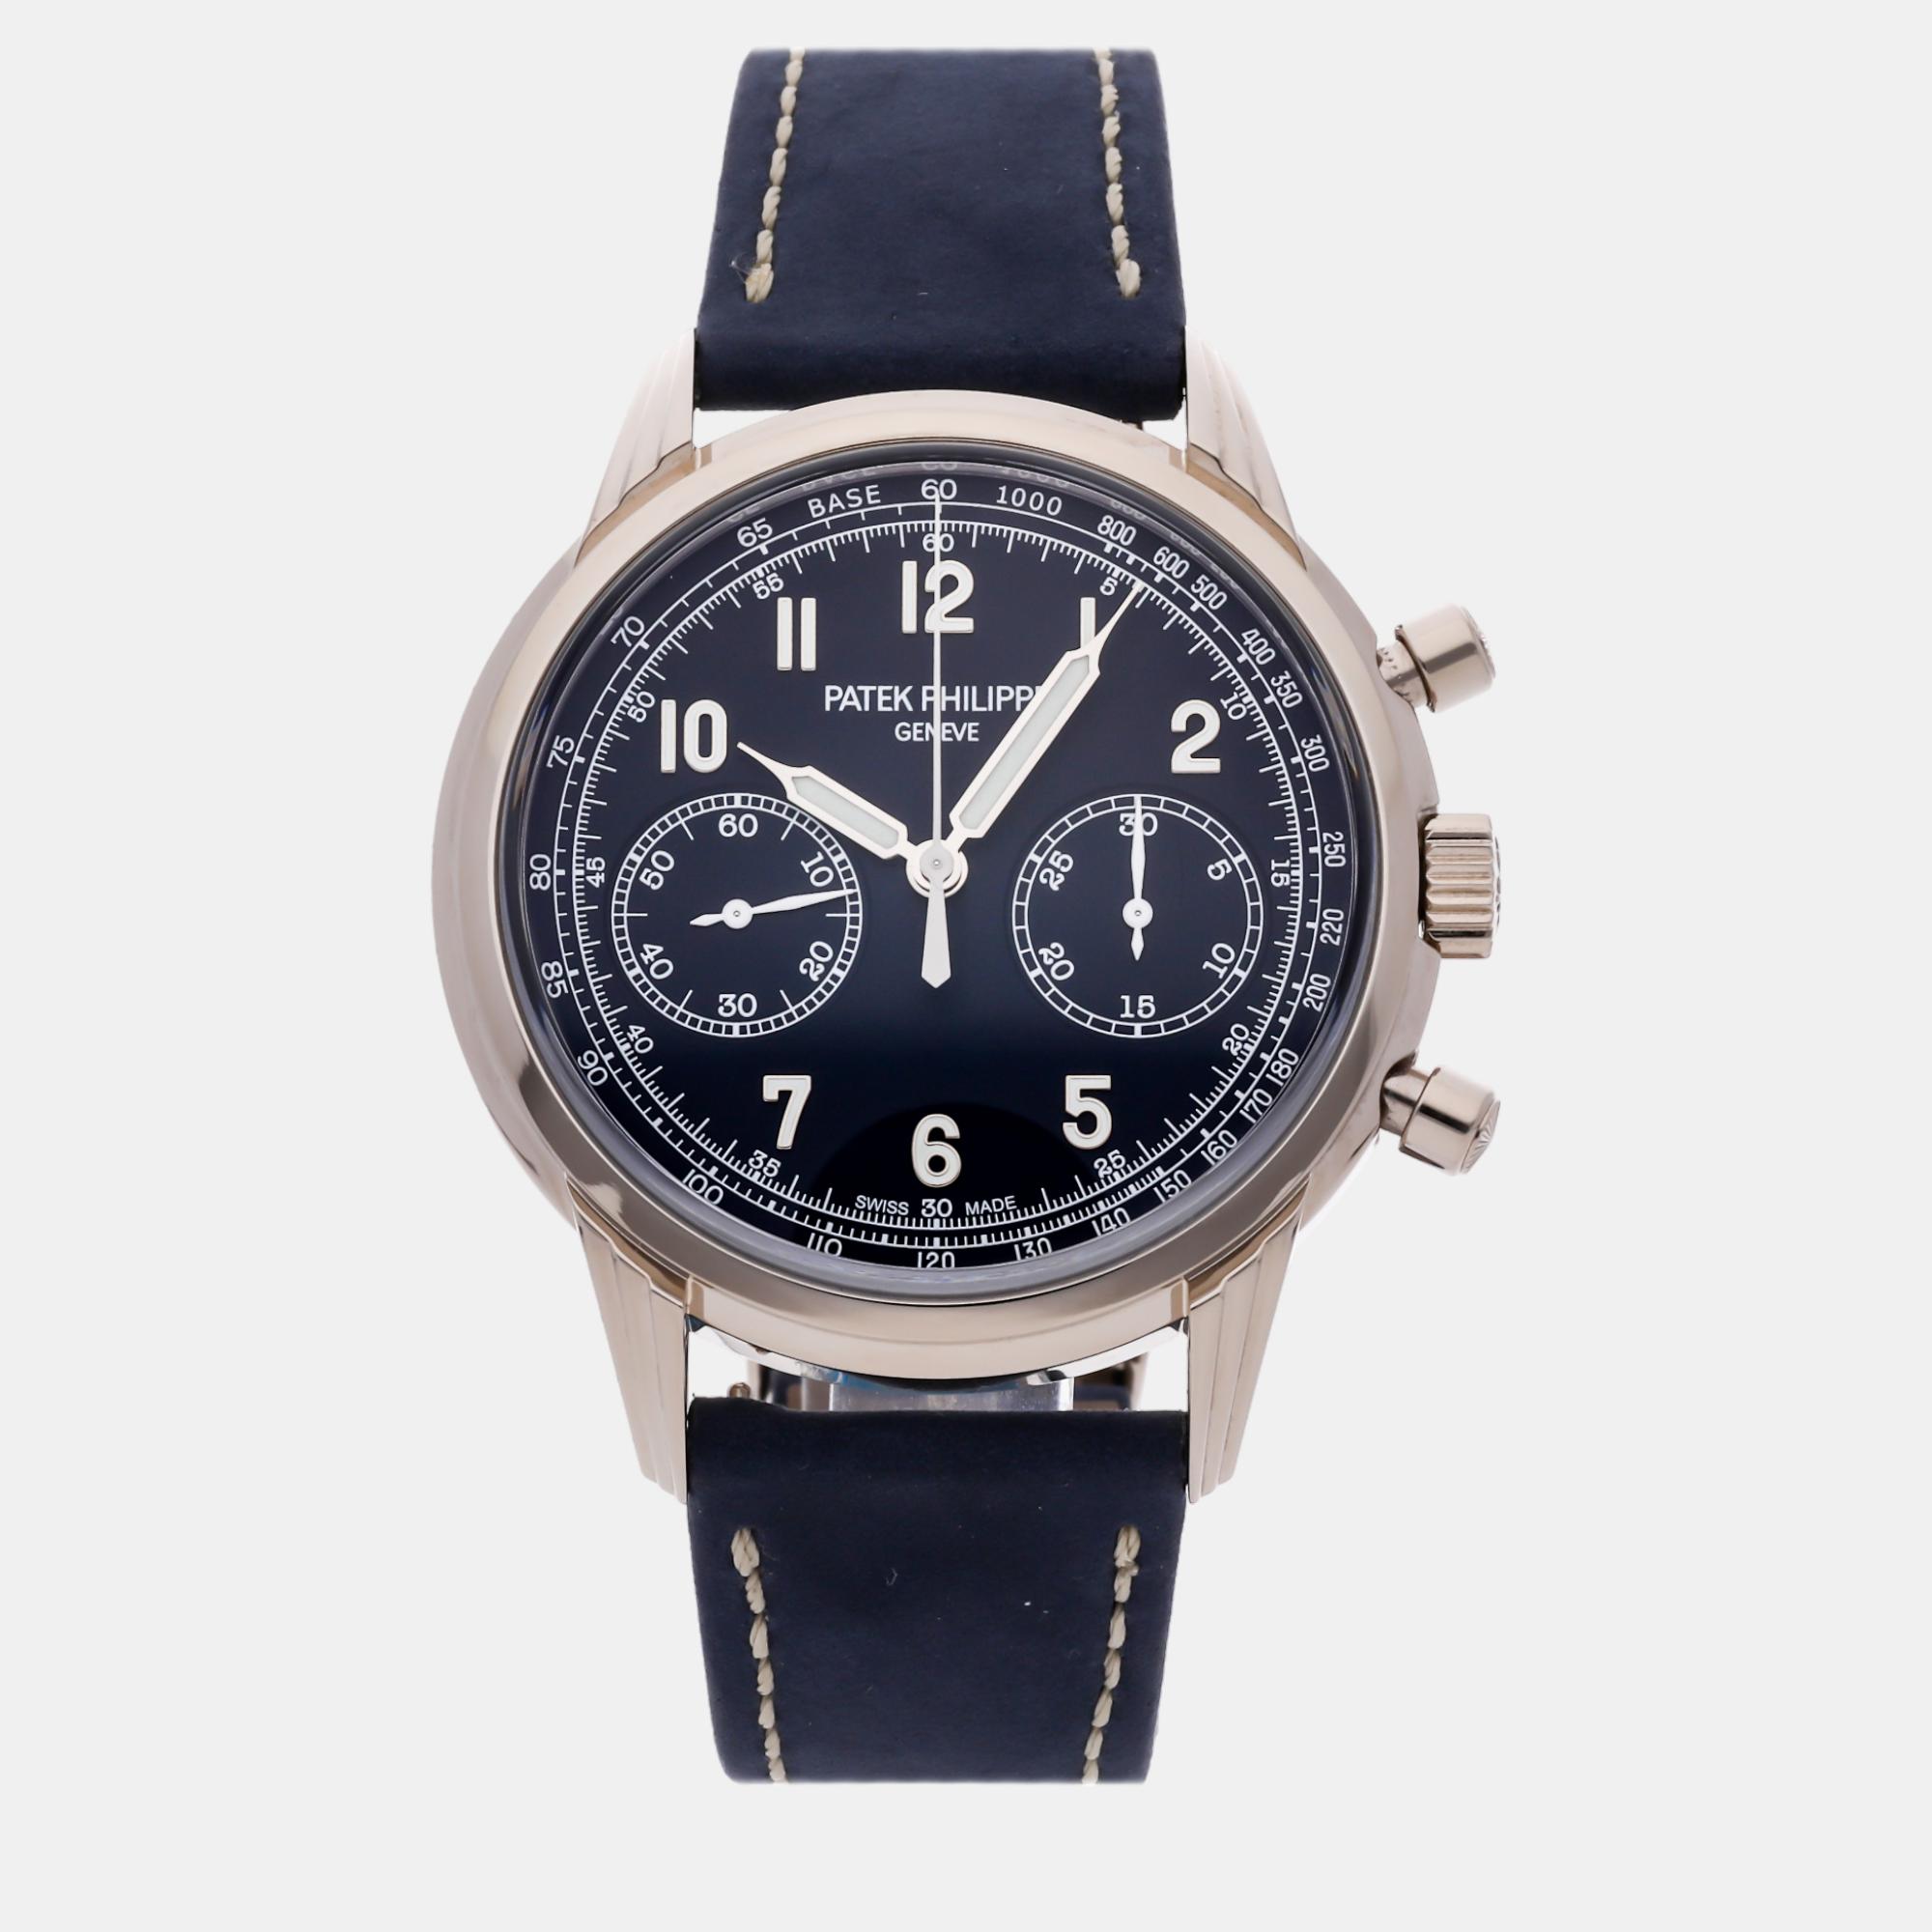 Patek philippe blue 18k white gold complications manual winding men's wristwatch 41 mm